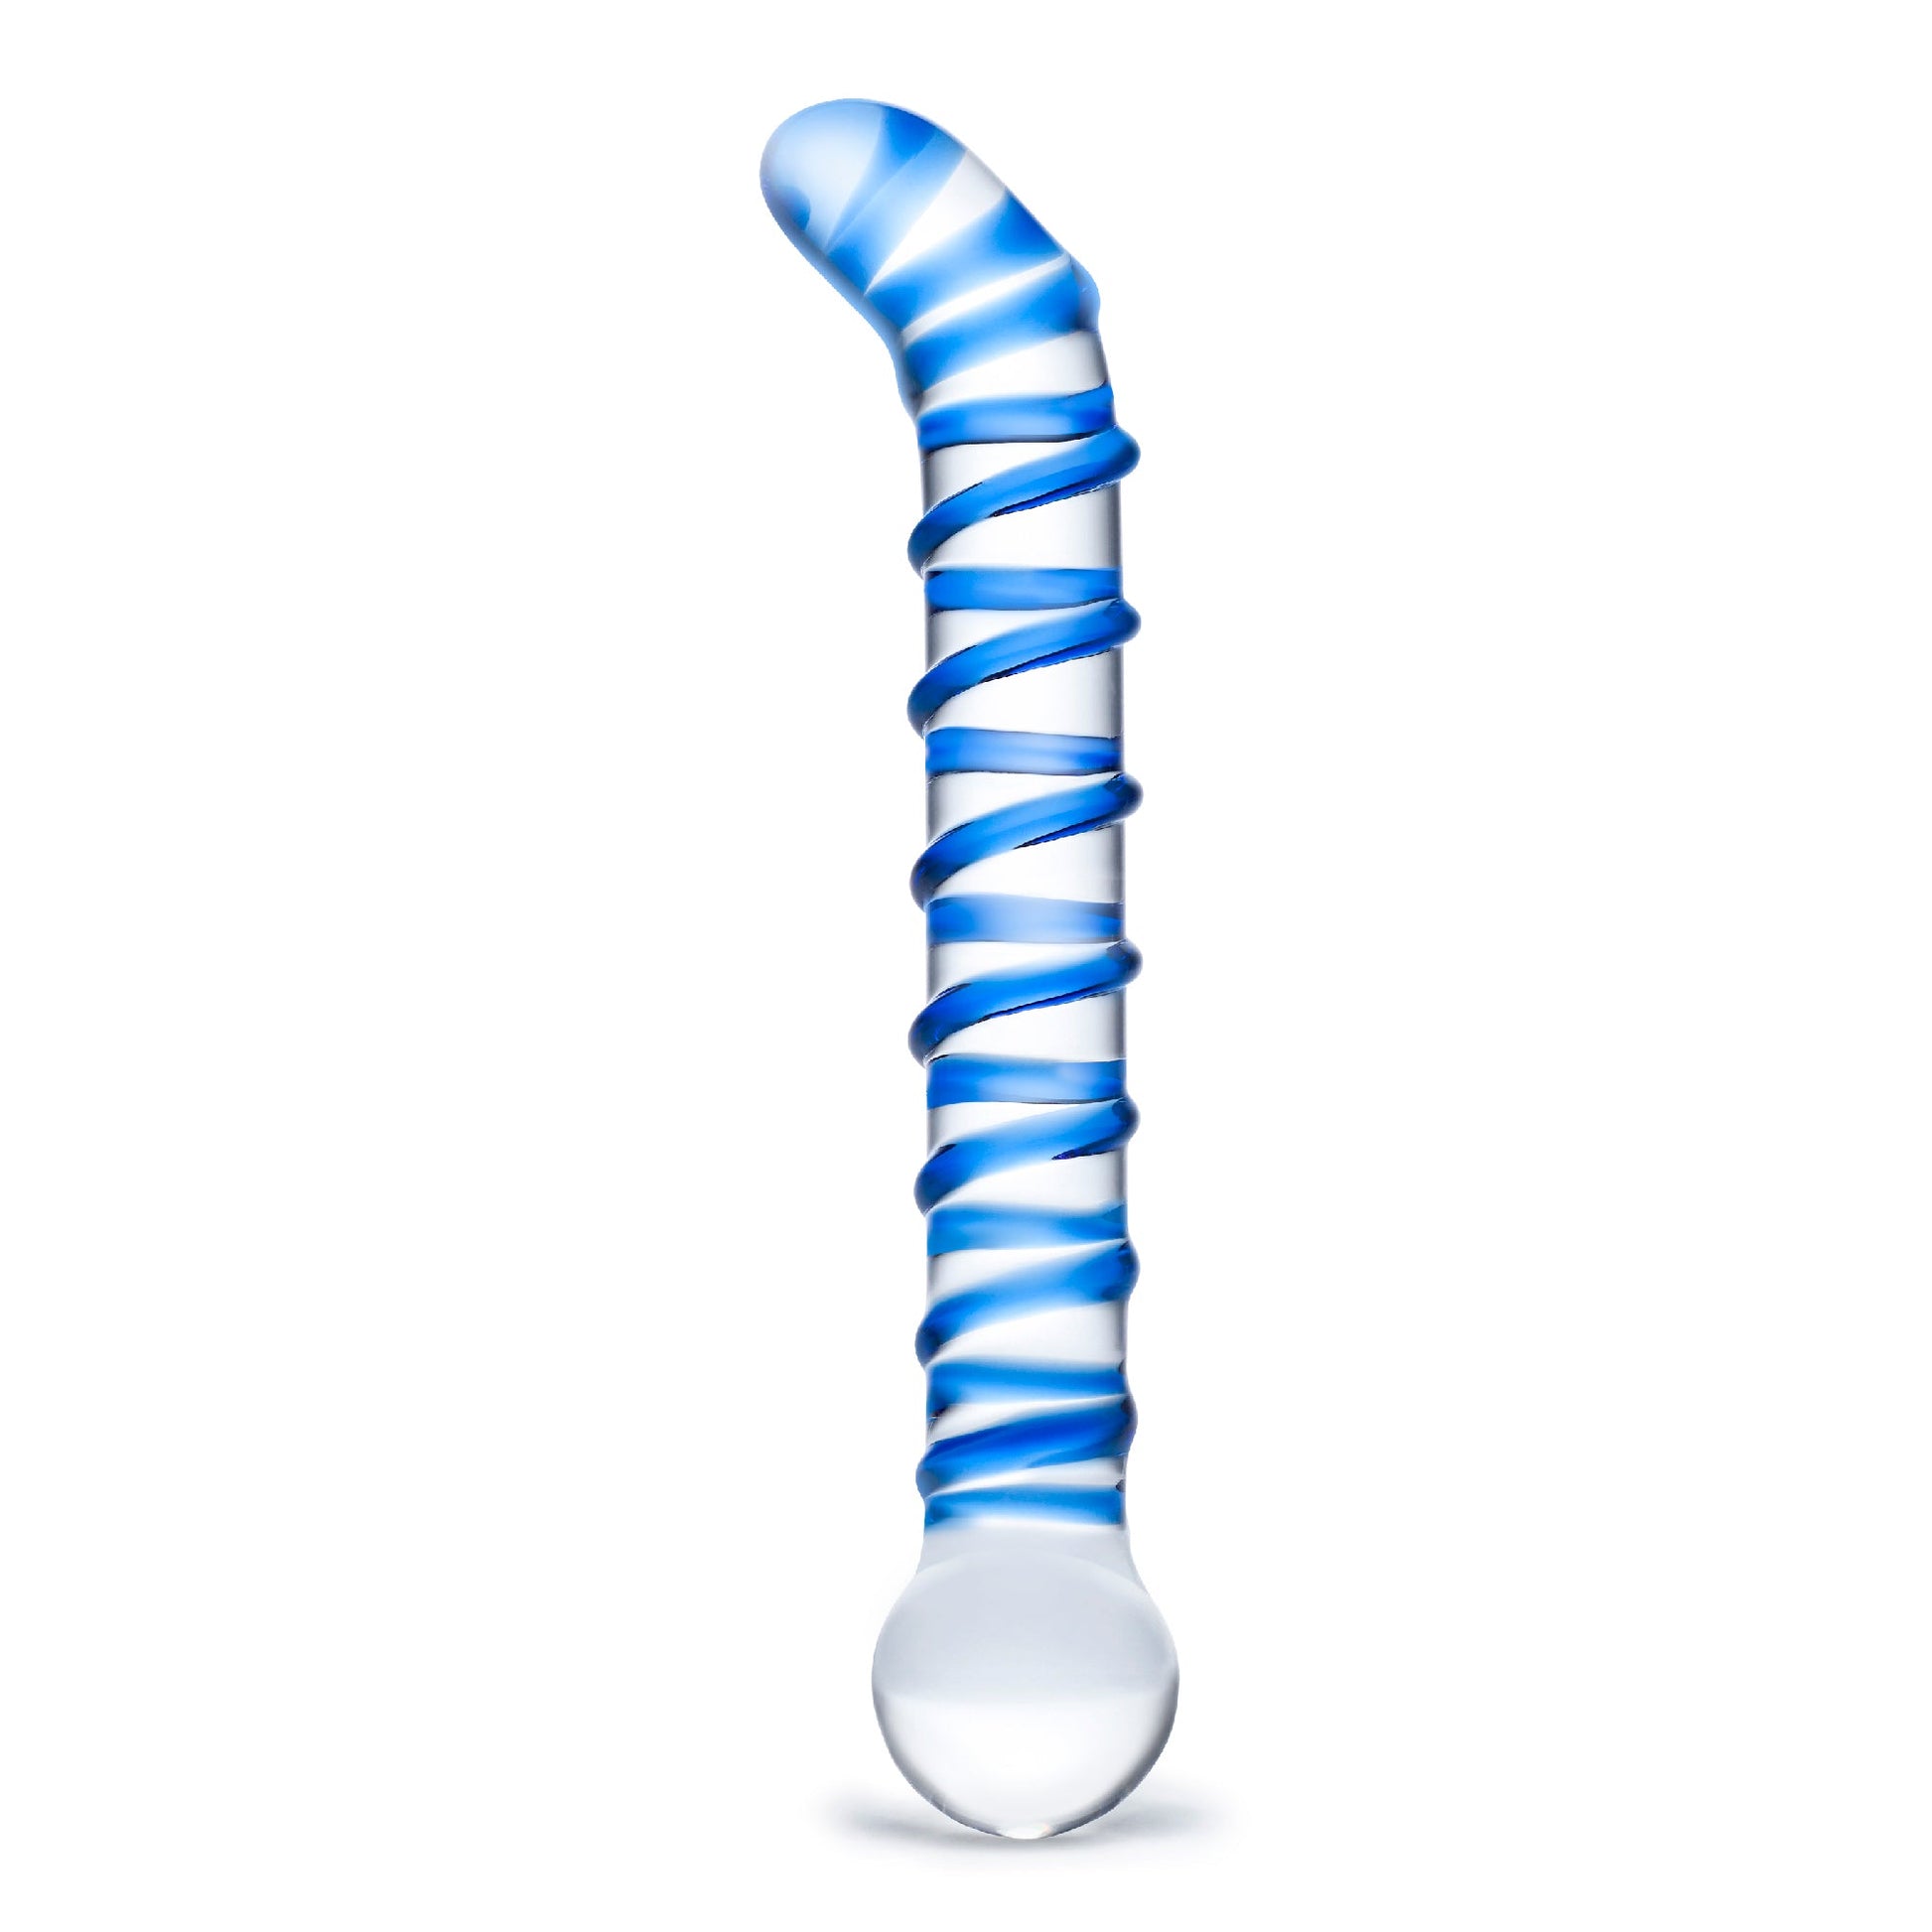 Mr. Swirly G-Spot玻璃阳具-9Rabbit北美情趣用品